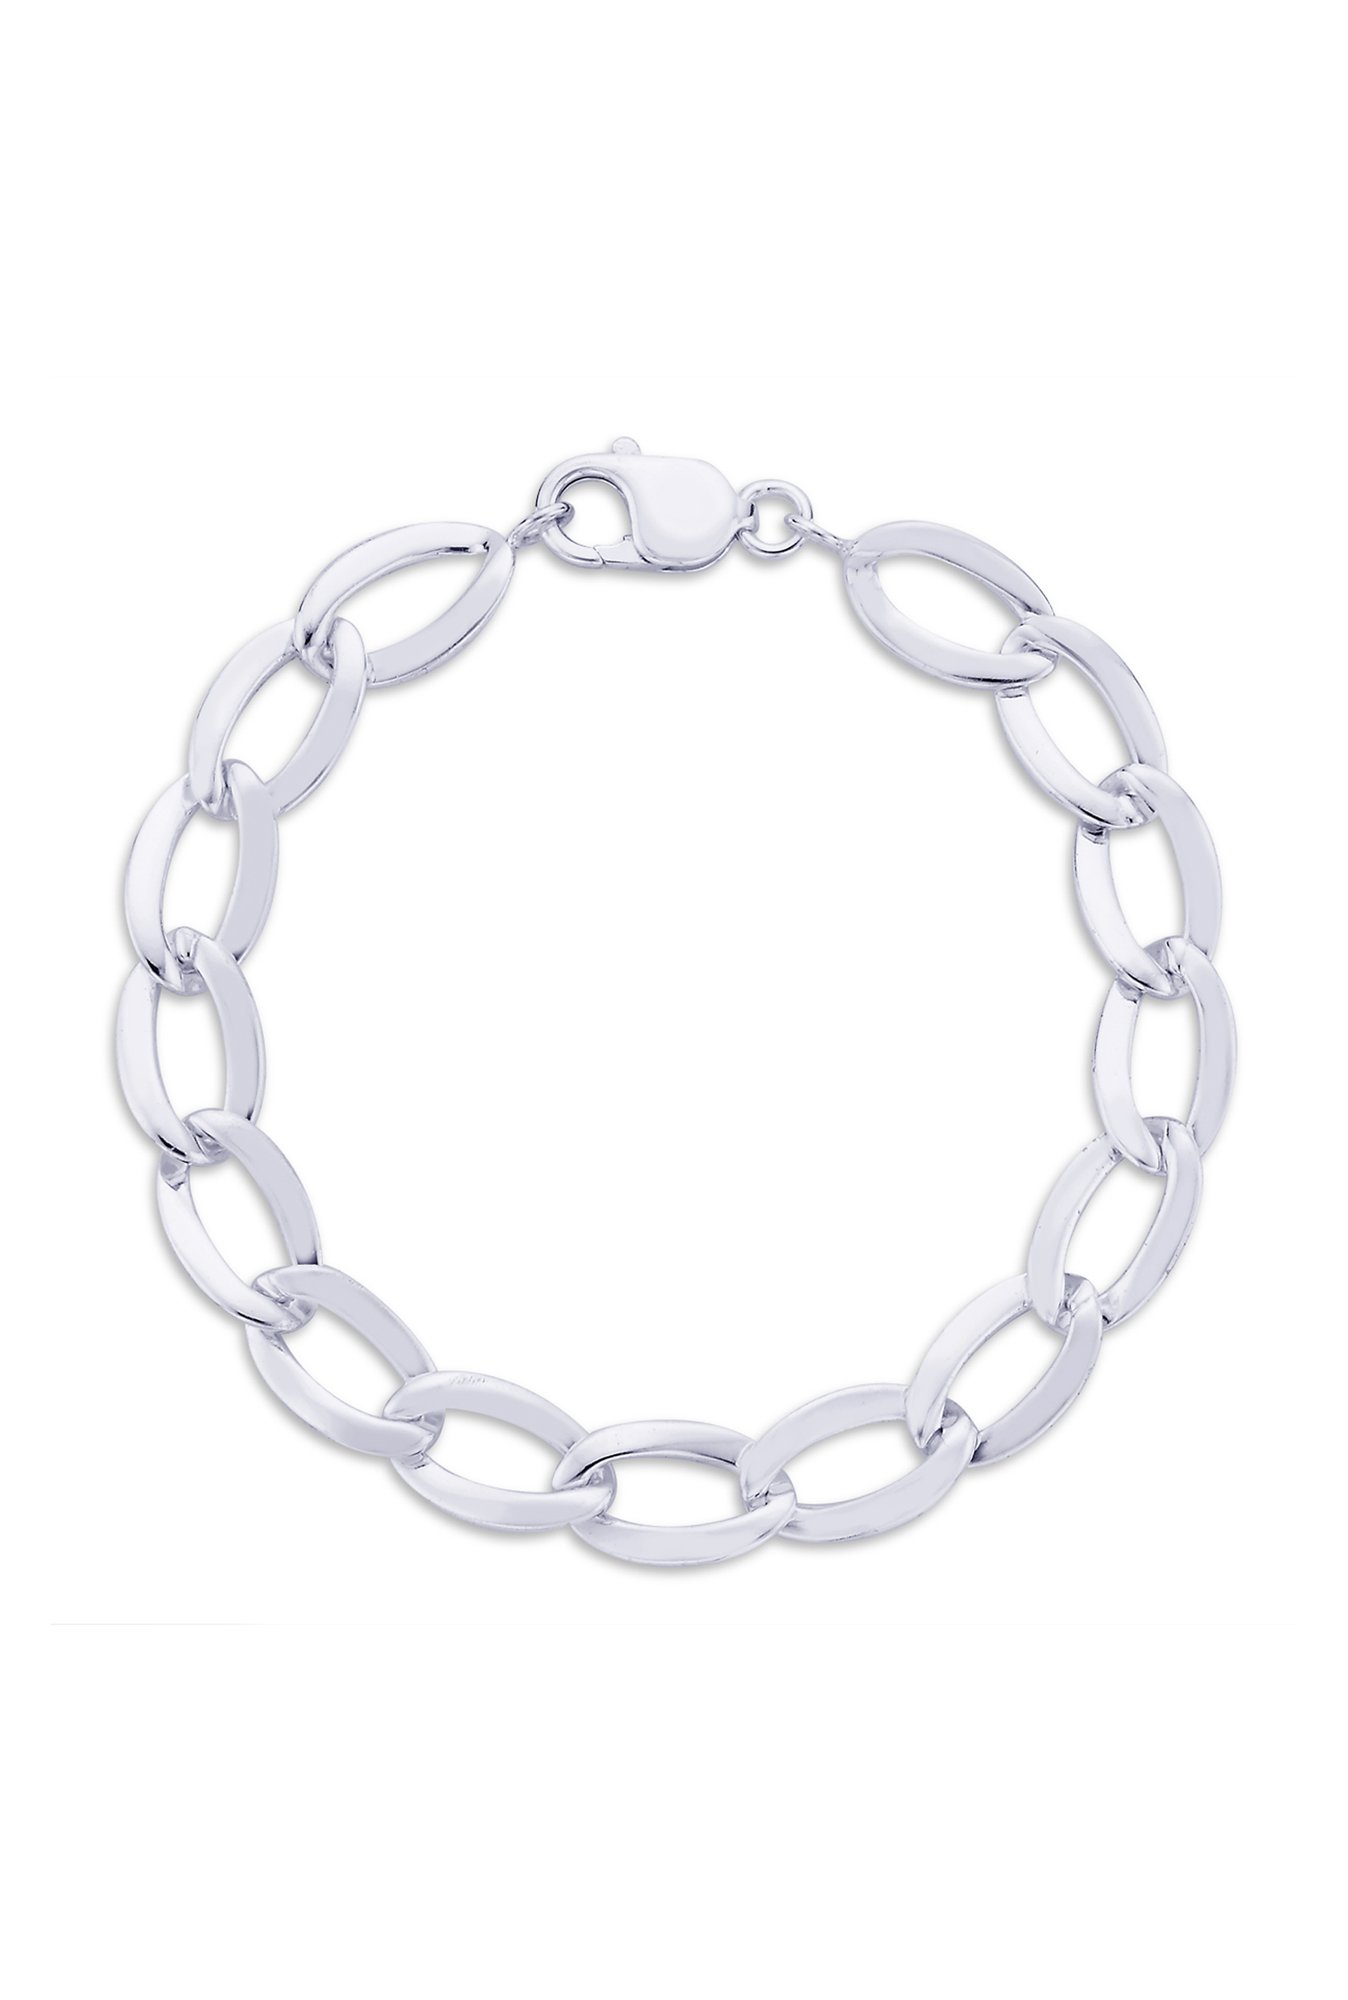 Buy Taraash 925 Sterling Silver Link Chain Bracelet Online At Best Price   Tata CLiQ